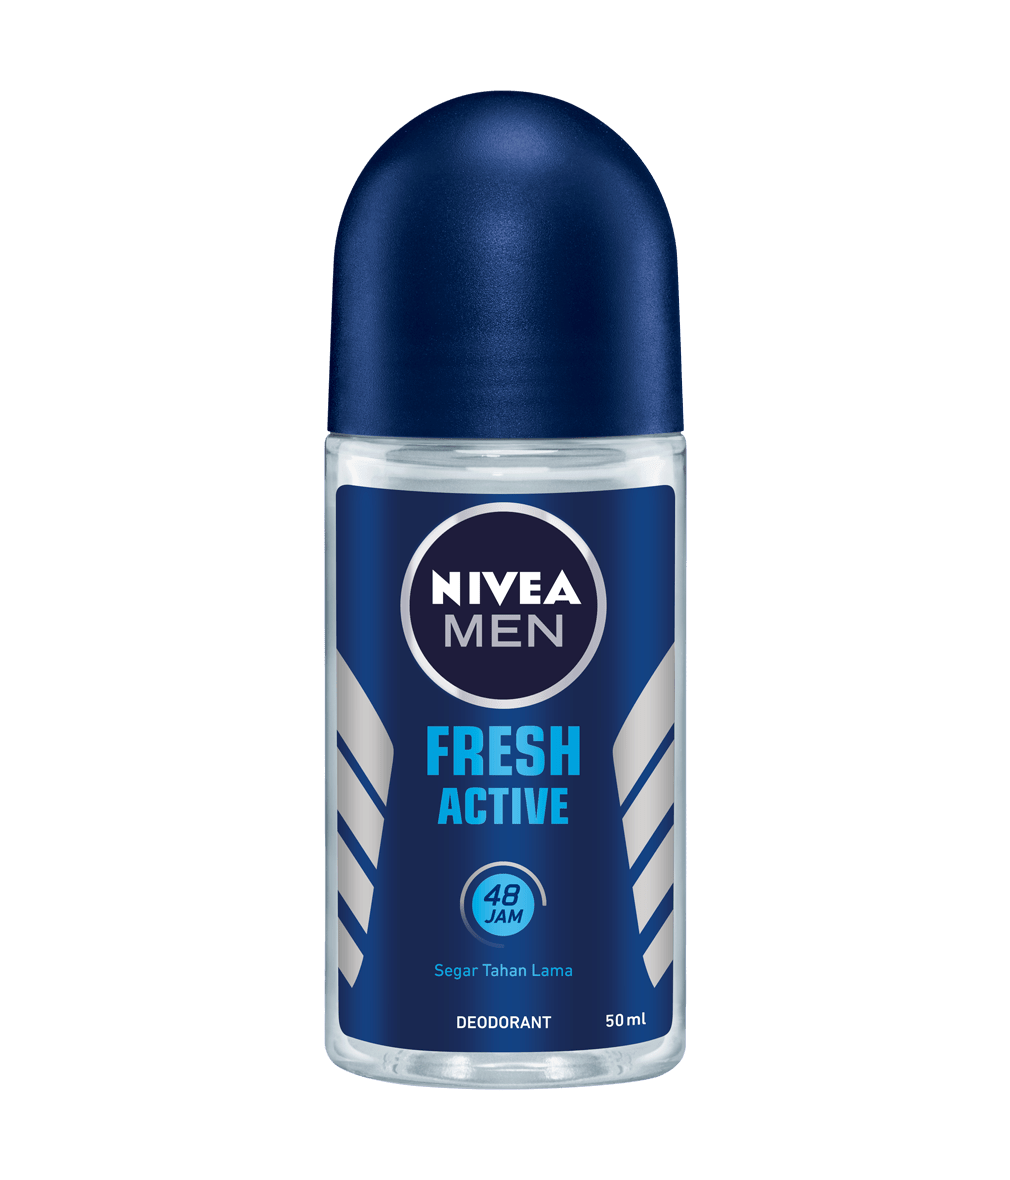 Deodorant | Longlasting Freshness | NIVEA MEN Fresh Active